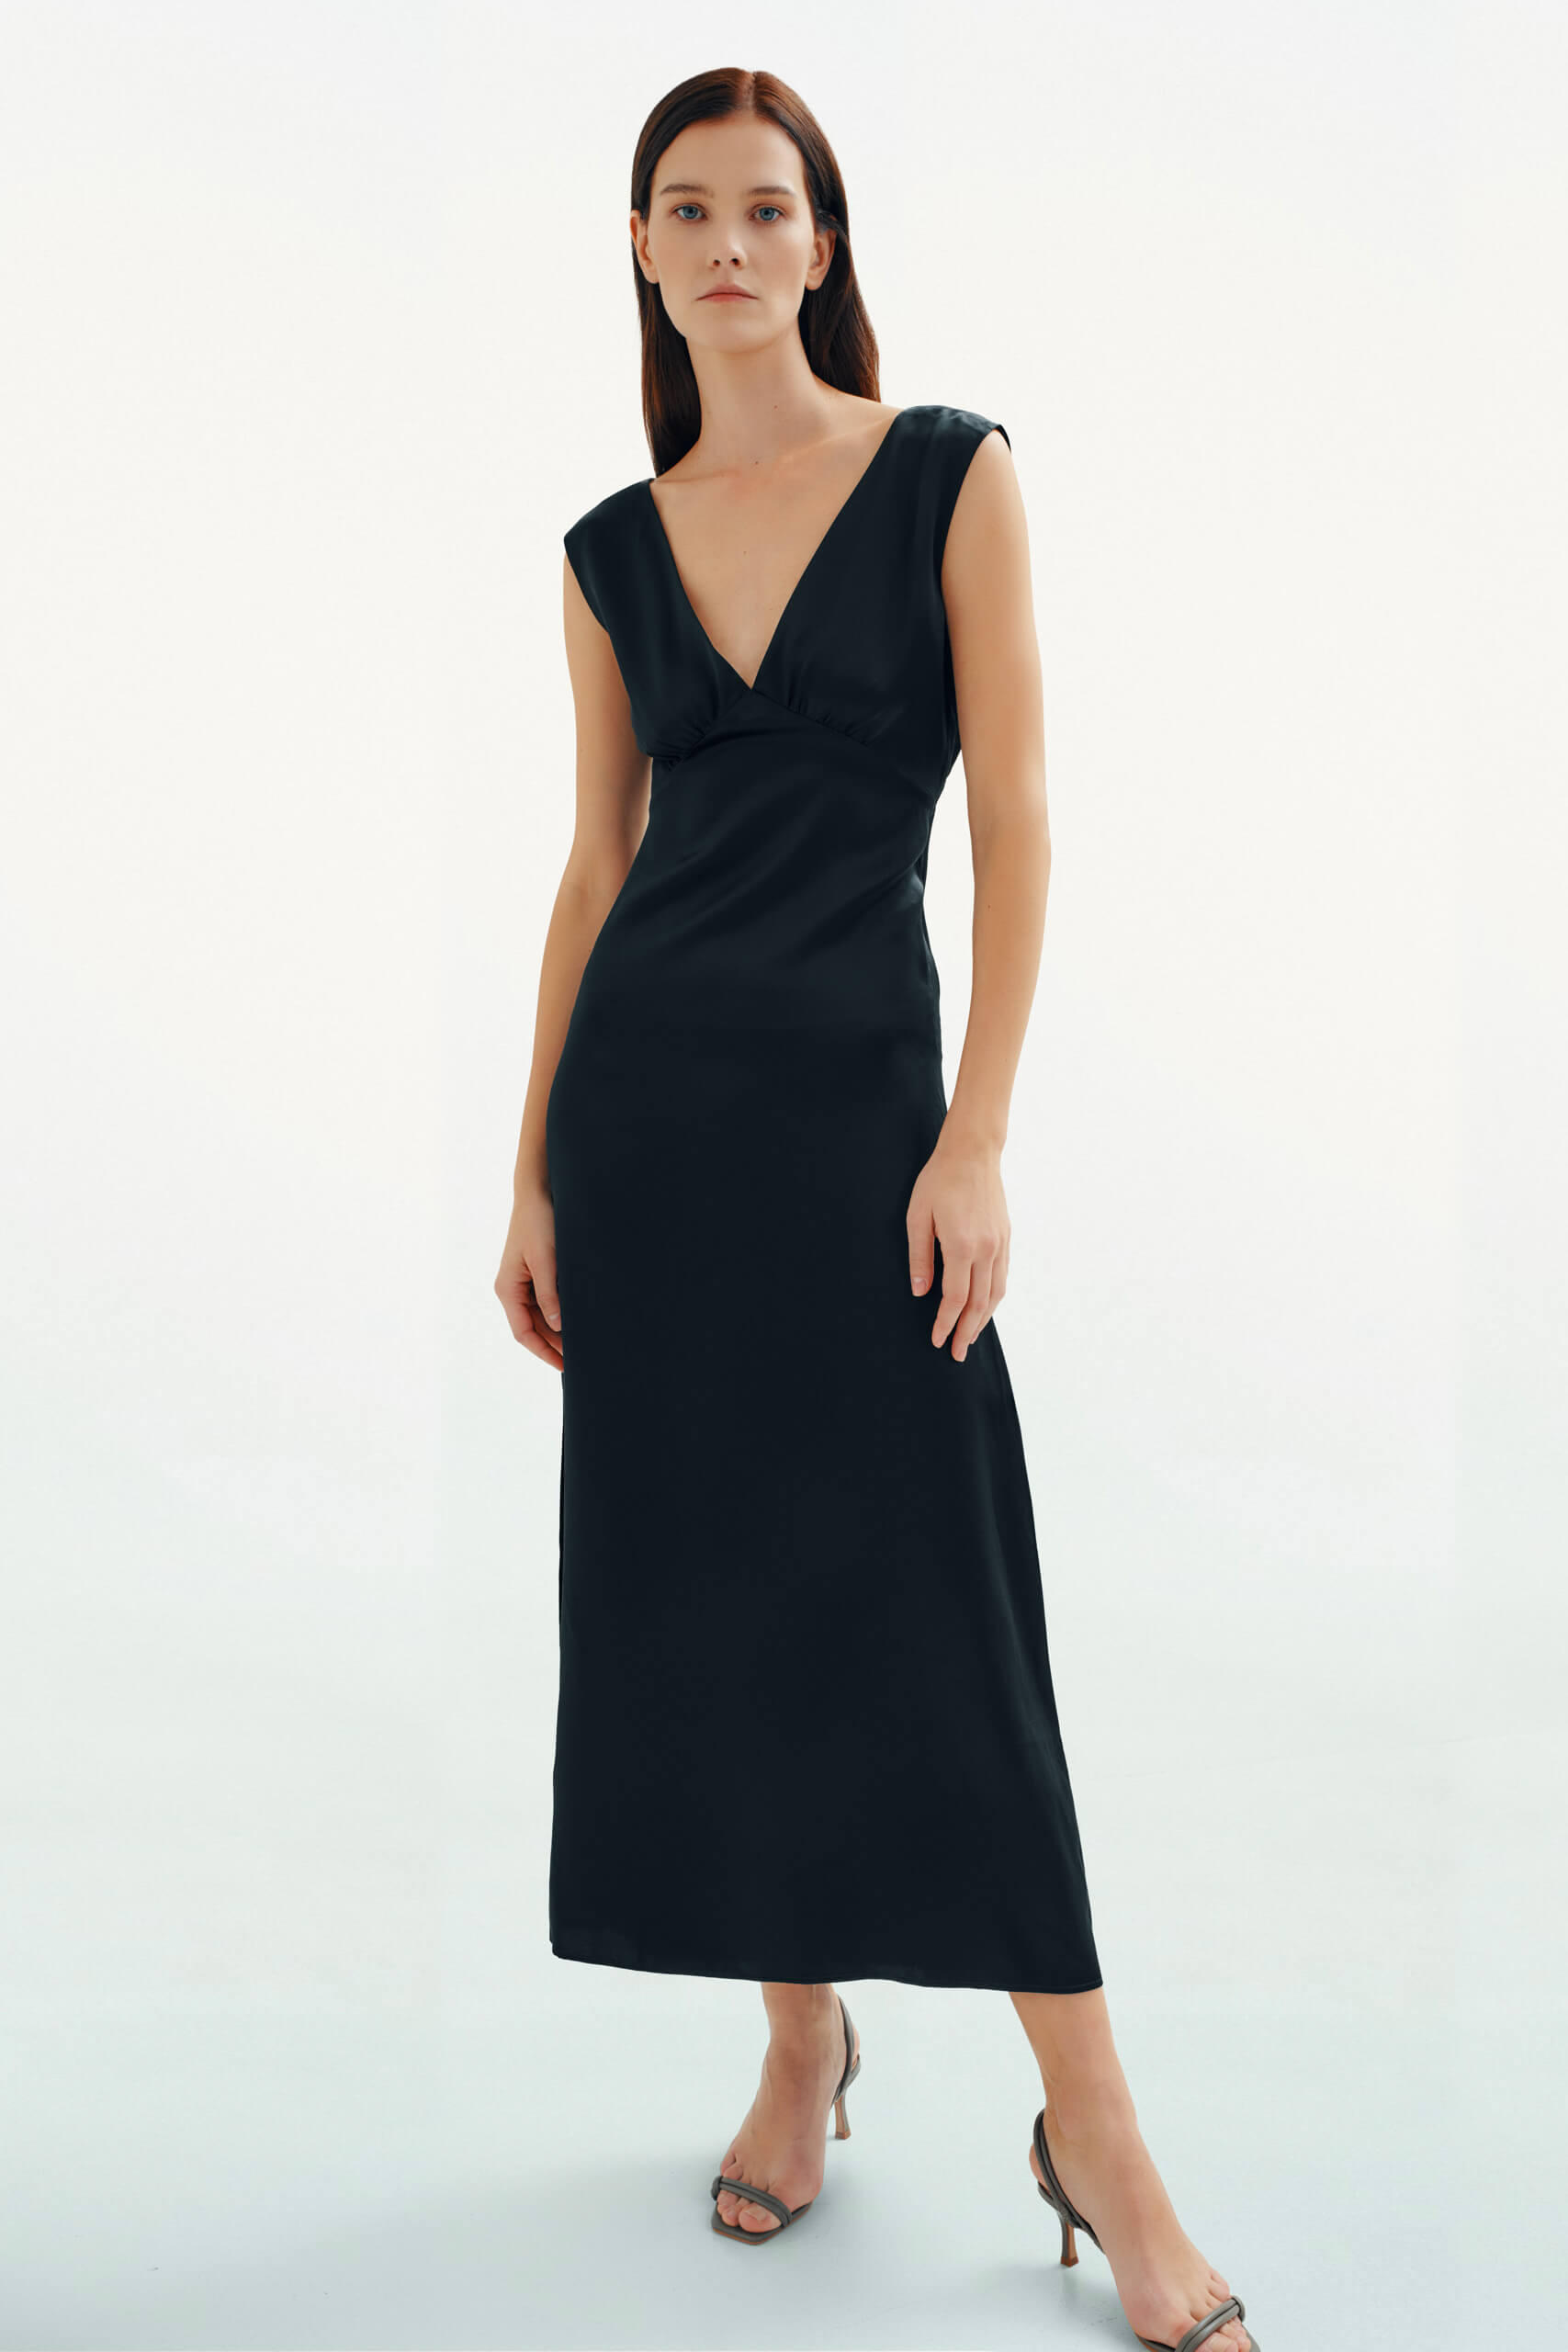 Black silk dress with a slit